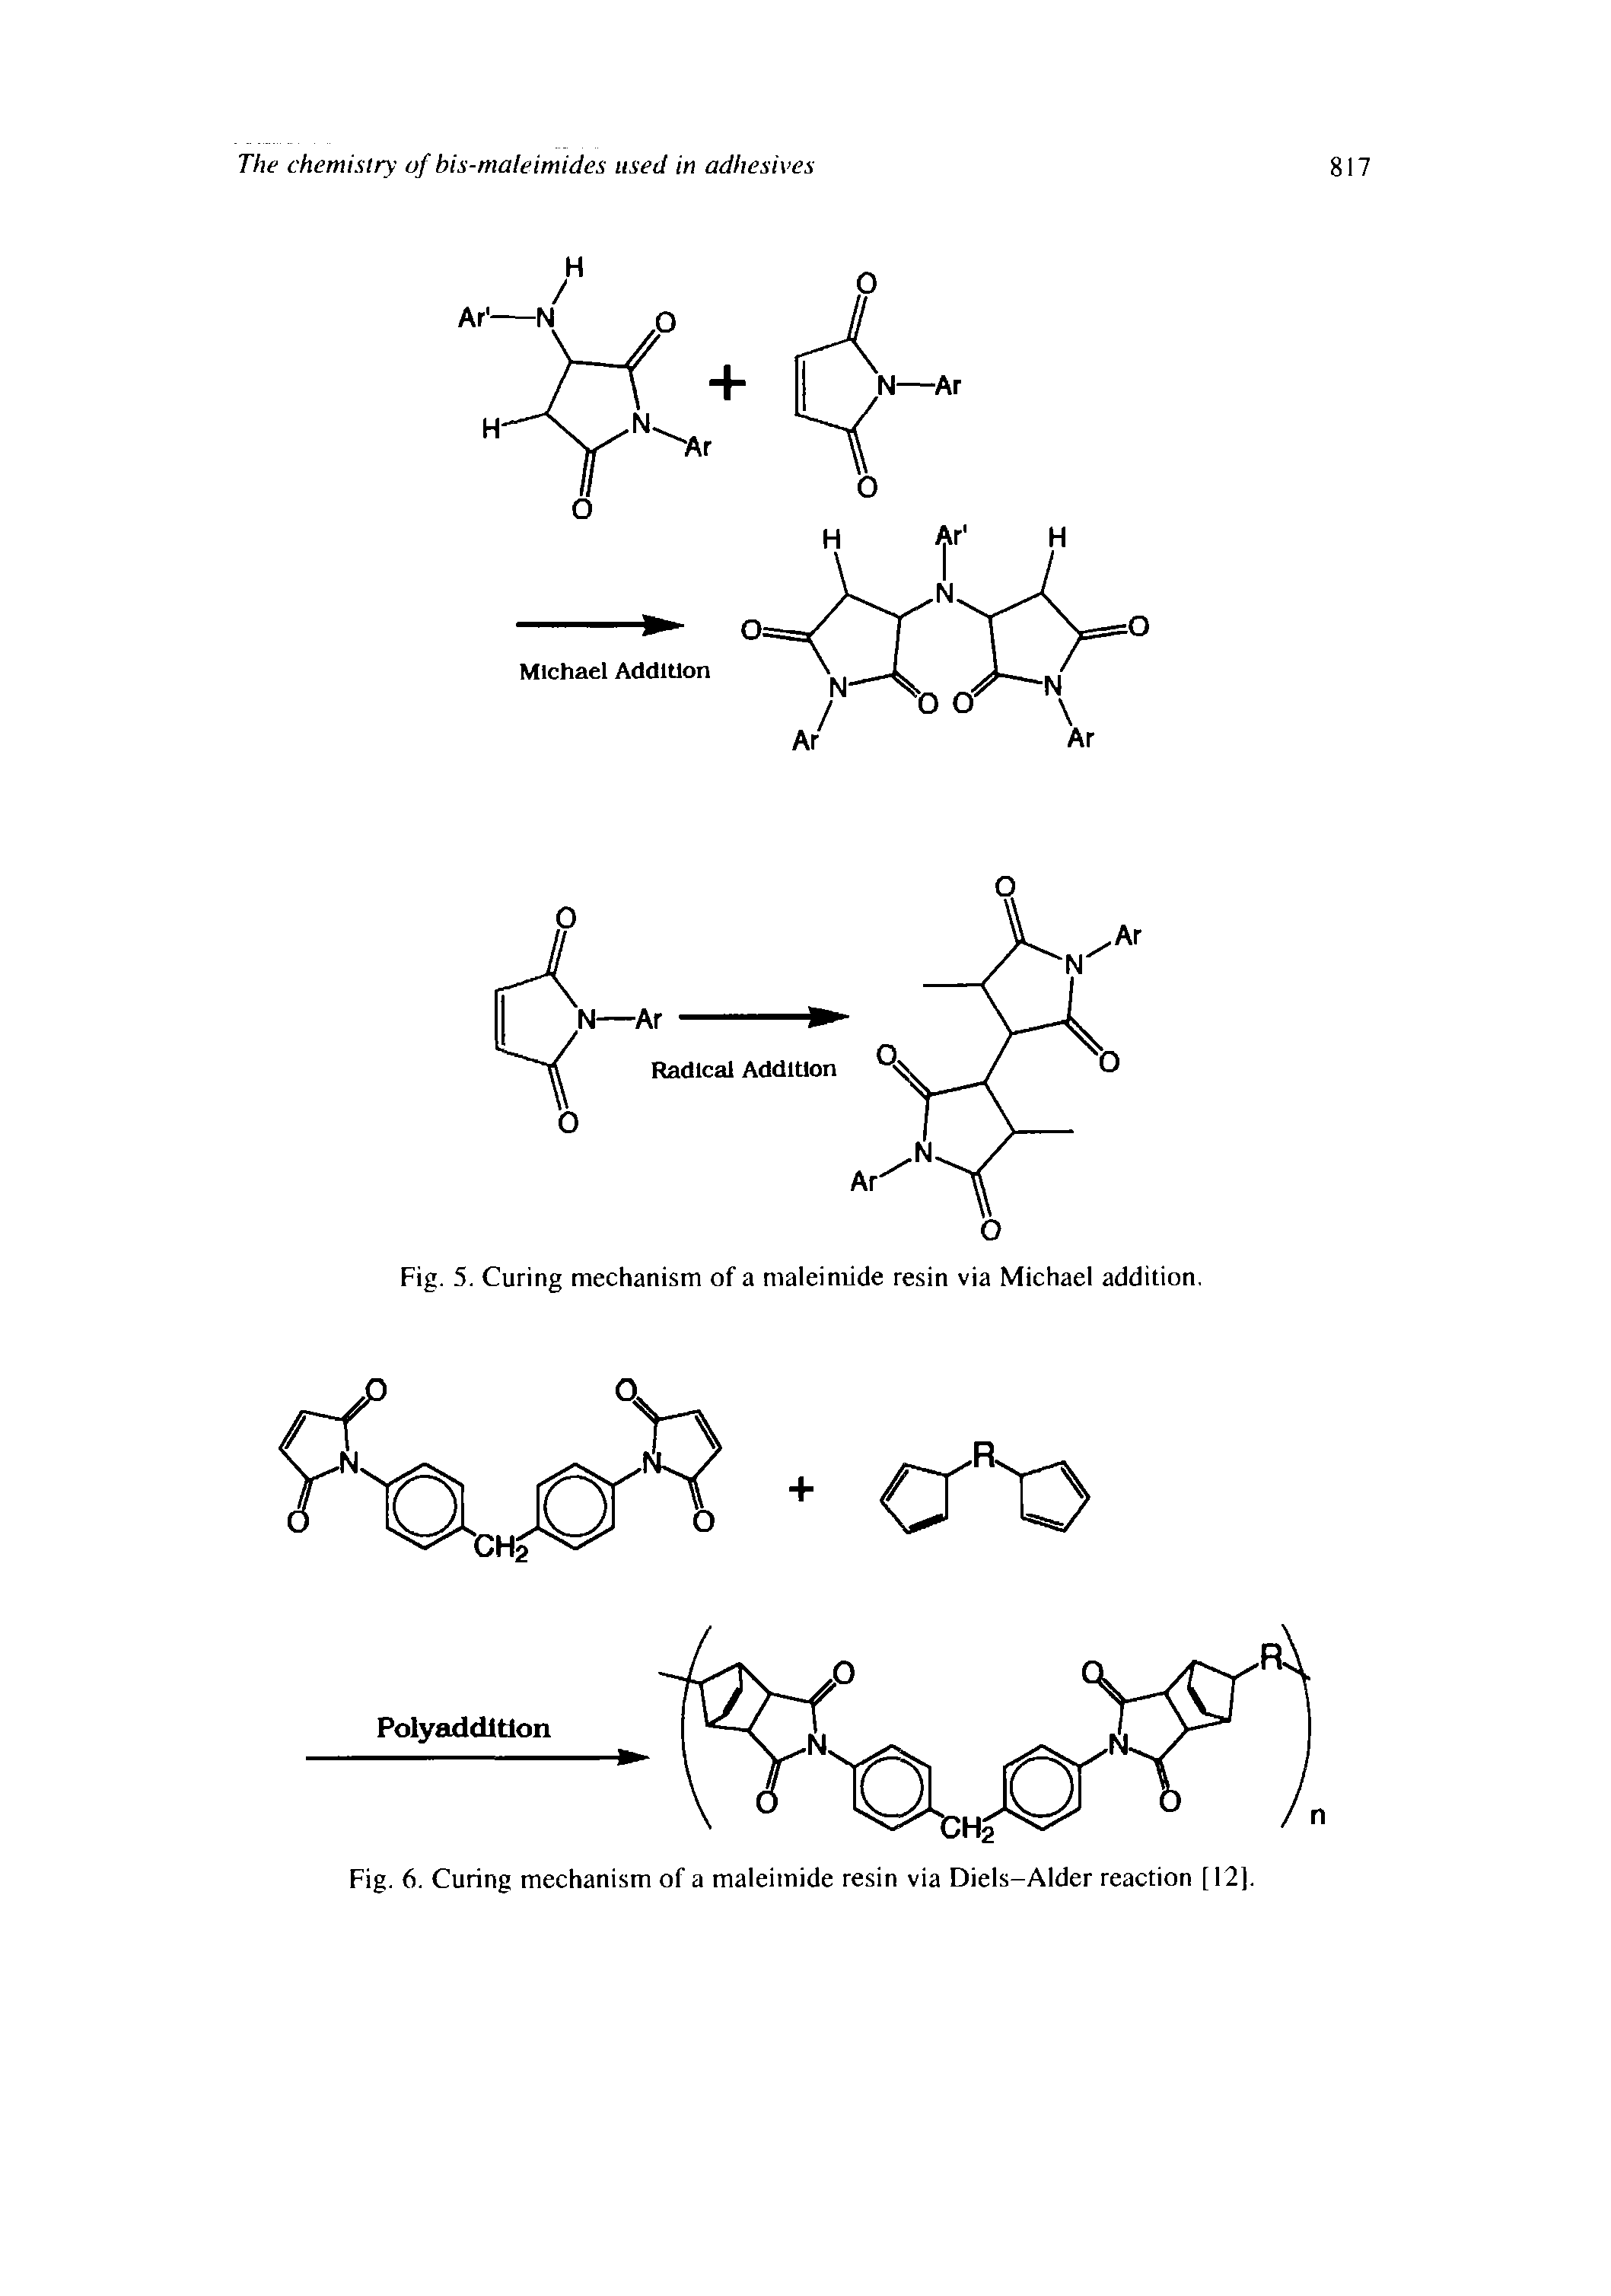 Fig. 6. Curing mechanism of a maleimide resin via Diels-Alder reaction [12).